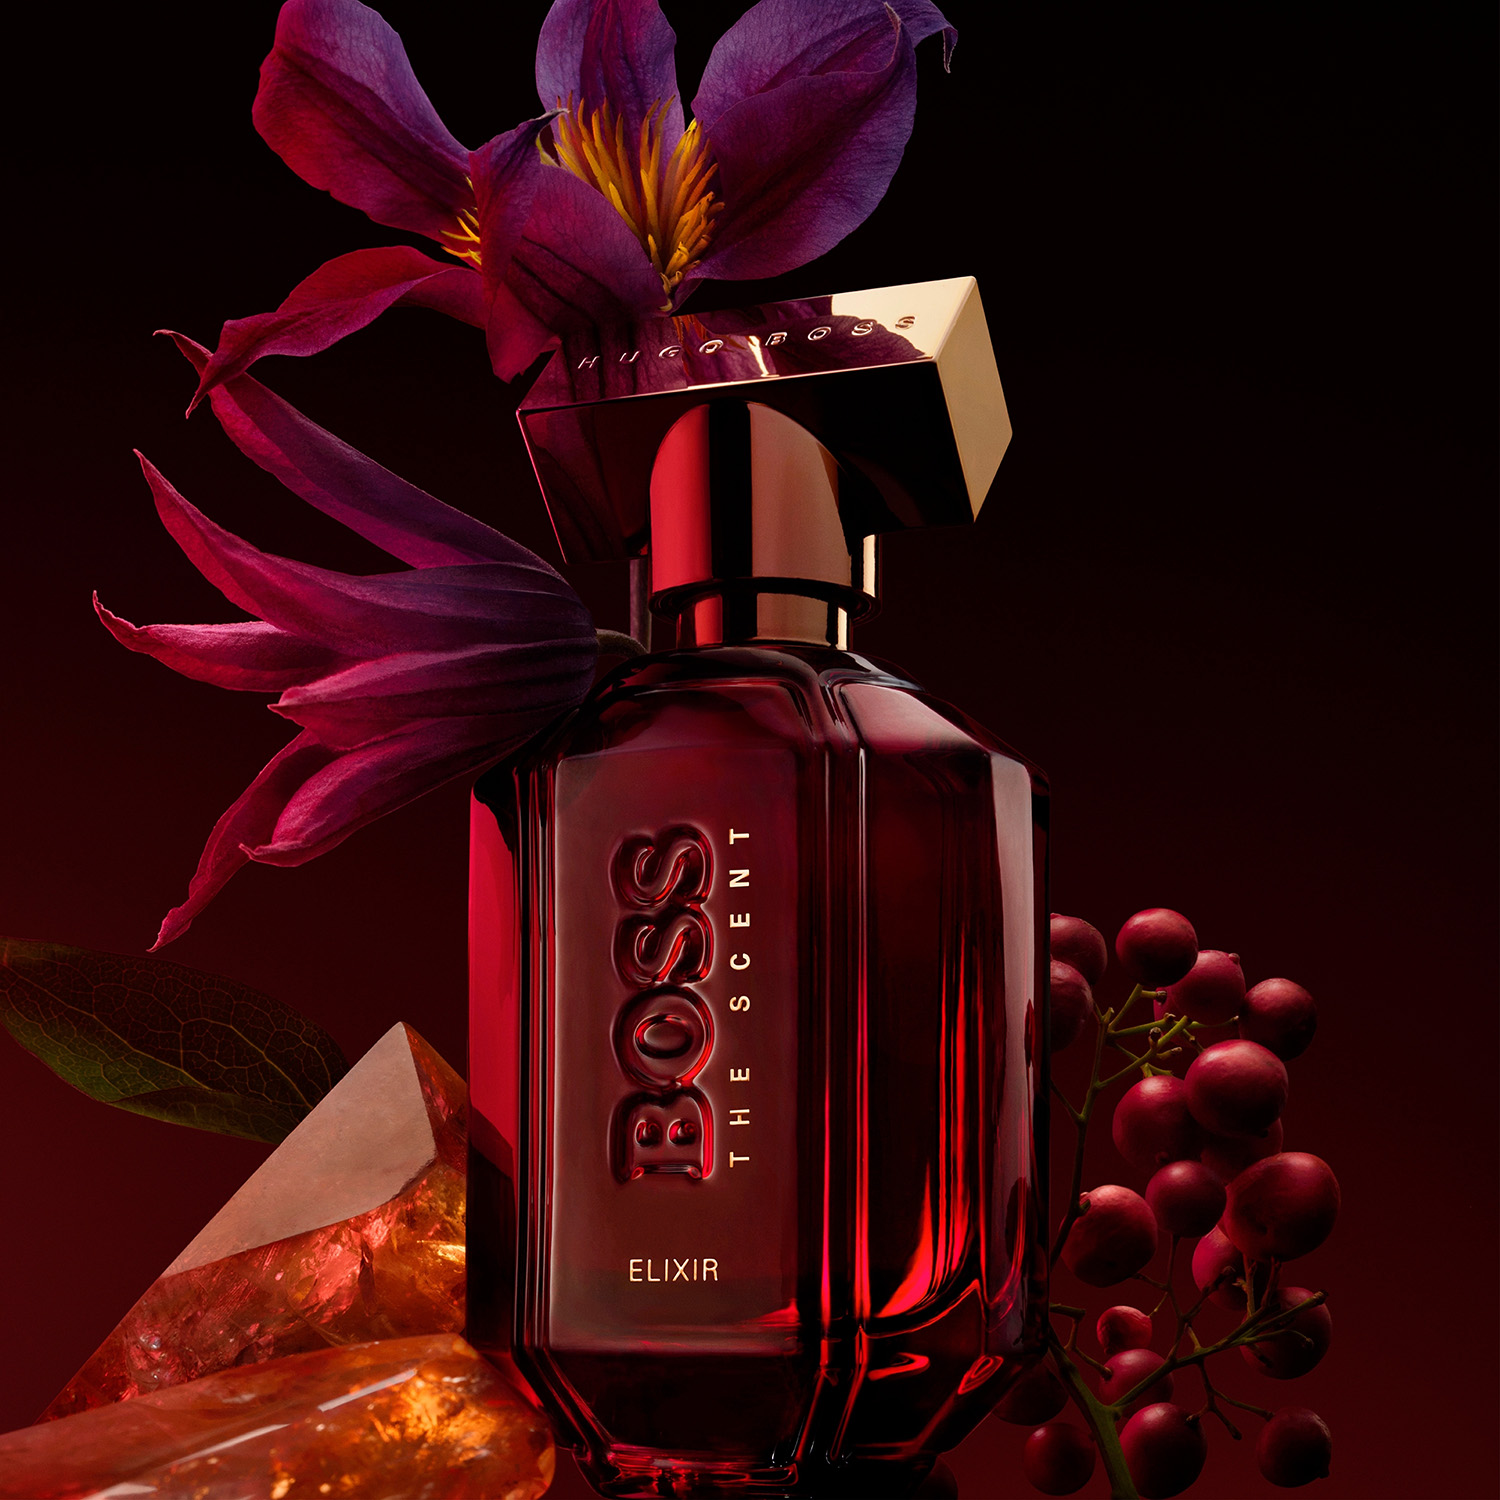 Hugo Boss The Scent Elixir for Her Parfum Intense 30ml